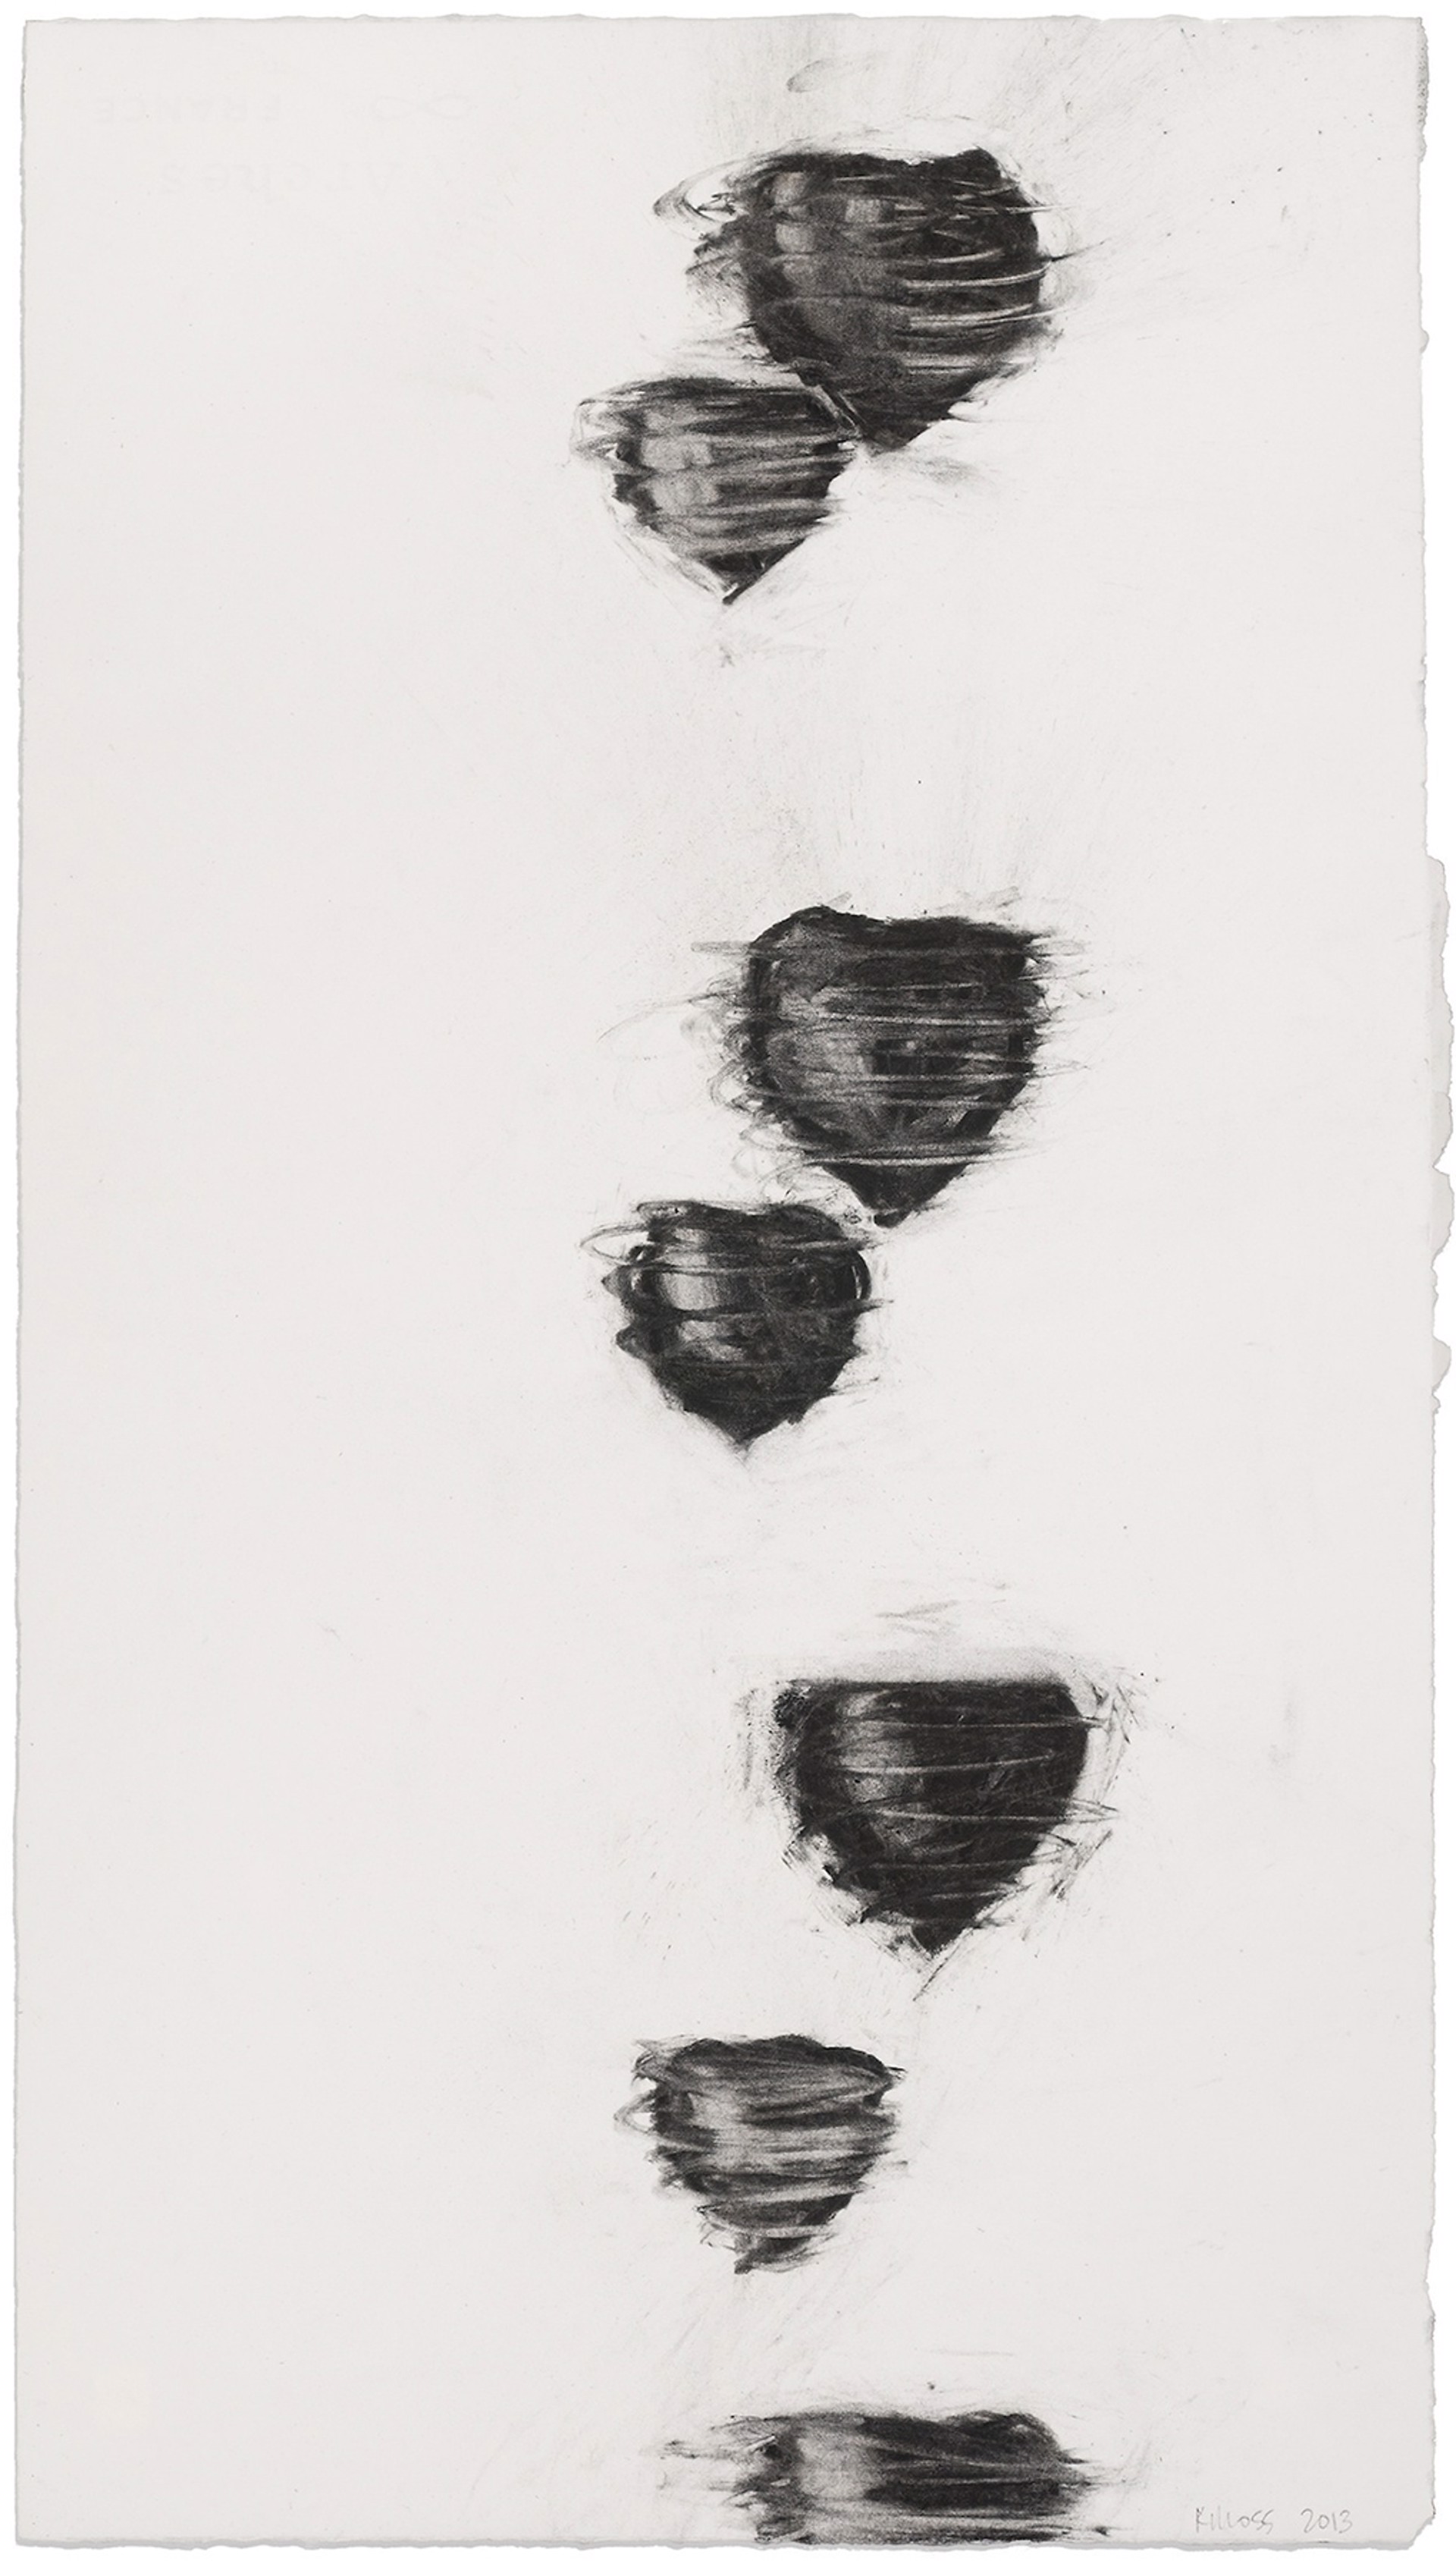 Hearts, beats drawing by Kathy Moss